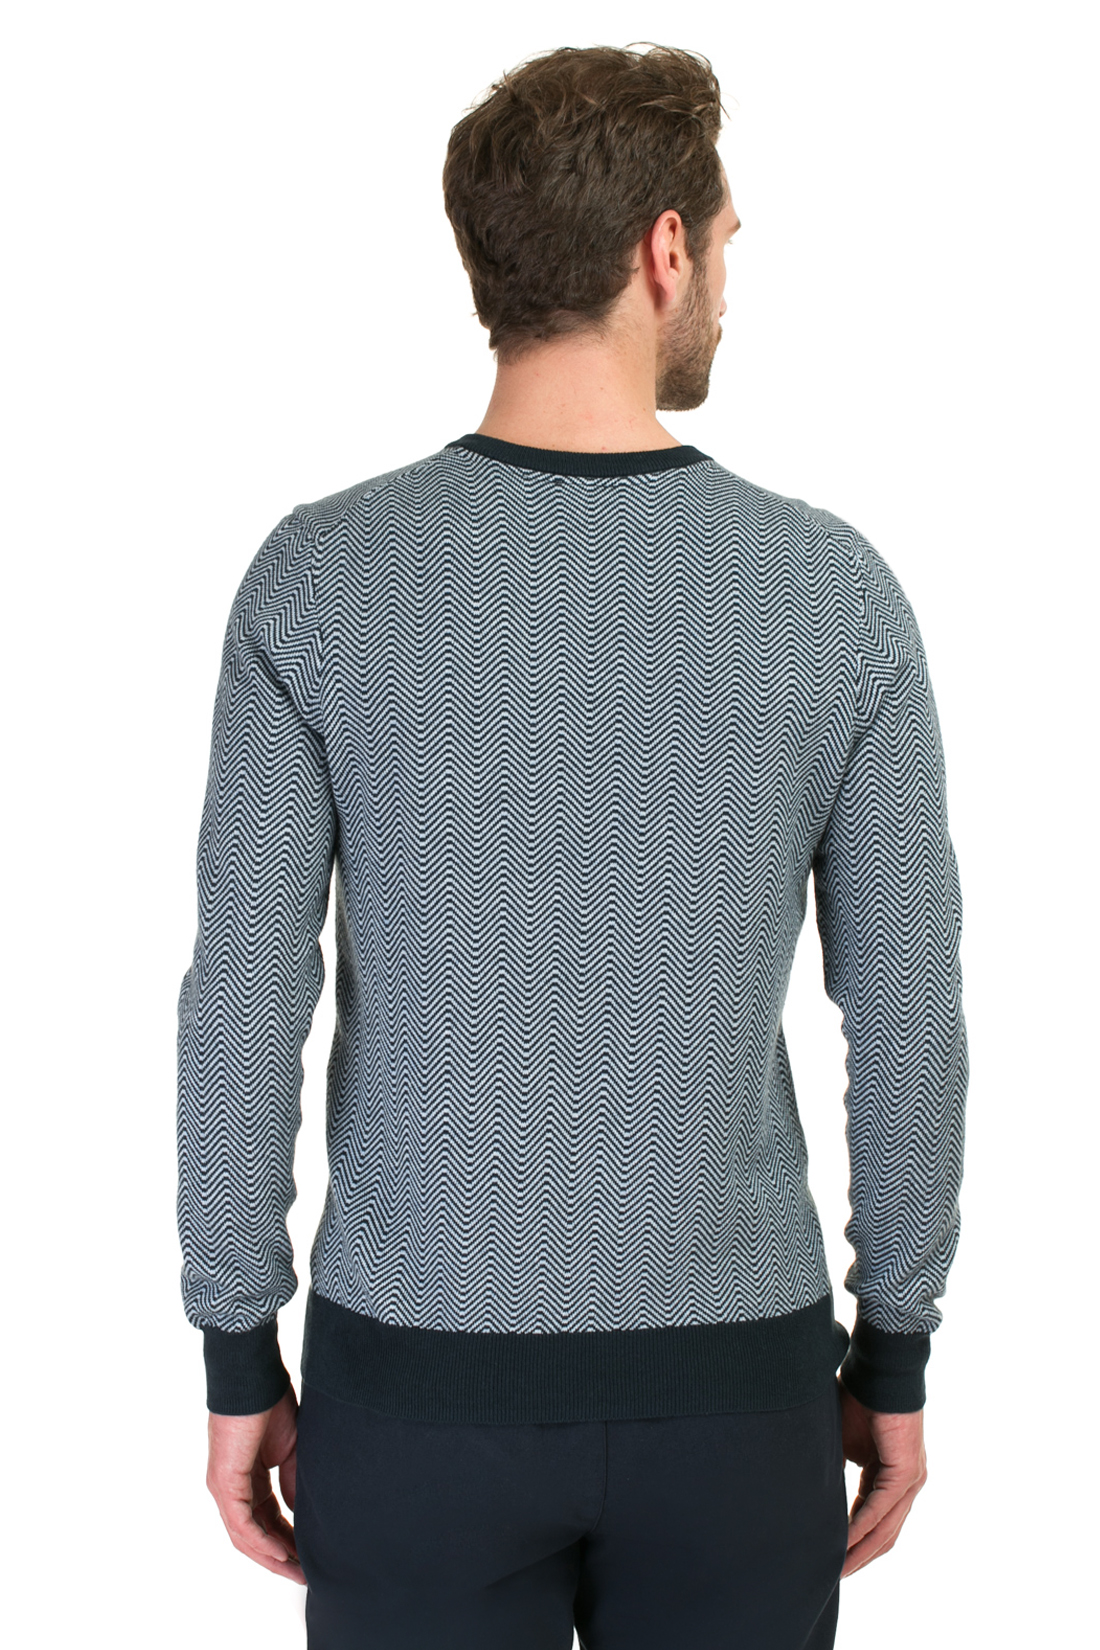 Пуловер с твидовым узором (арт. baon B637009), размер XXL, цвет синий Пуловер с твидовым узором (арт. baon B637009) - фото 2